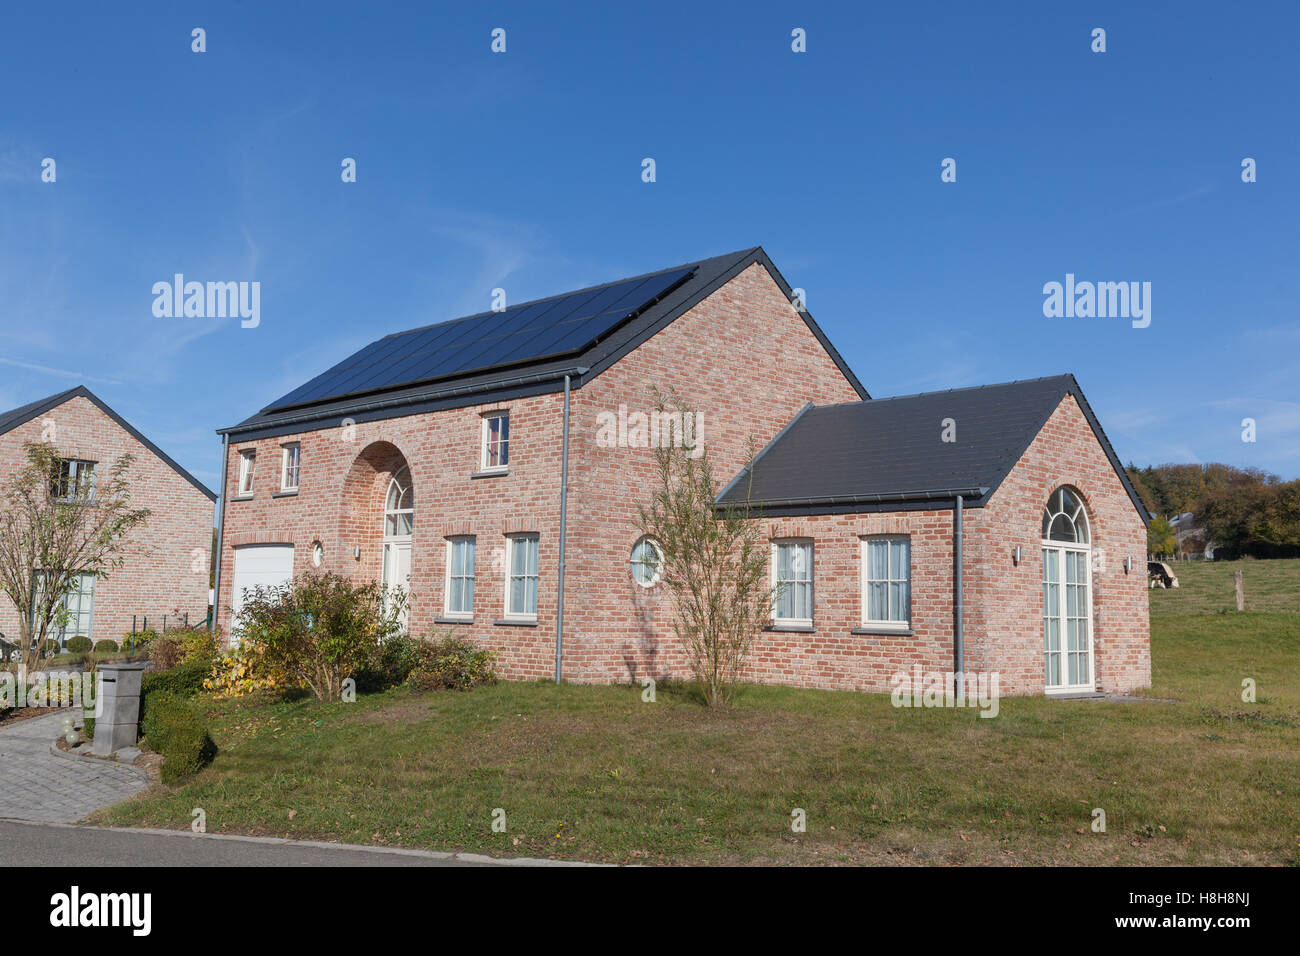 Modern house with solar panels for alternative energy Stock Photo